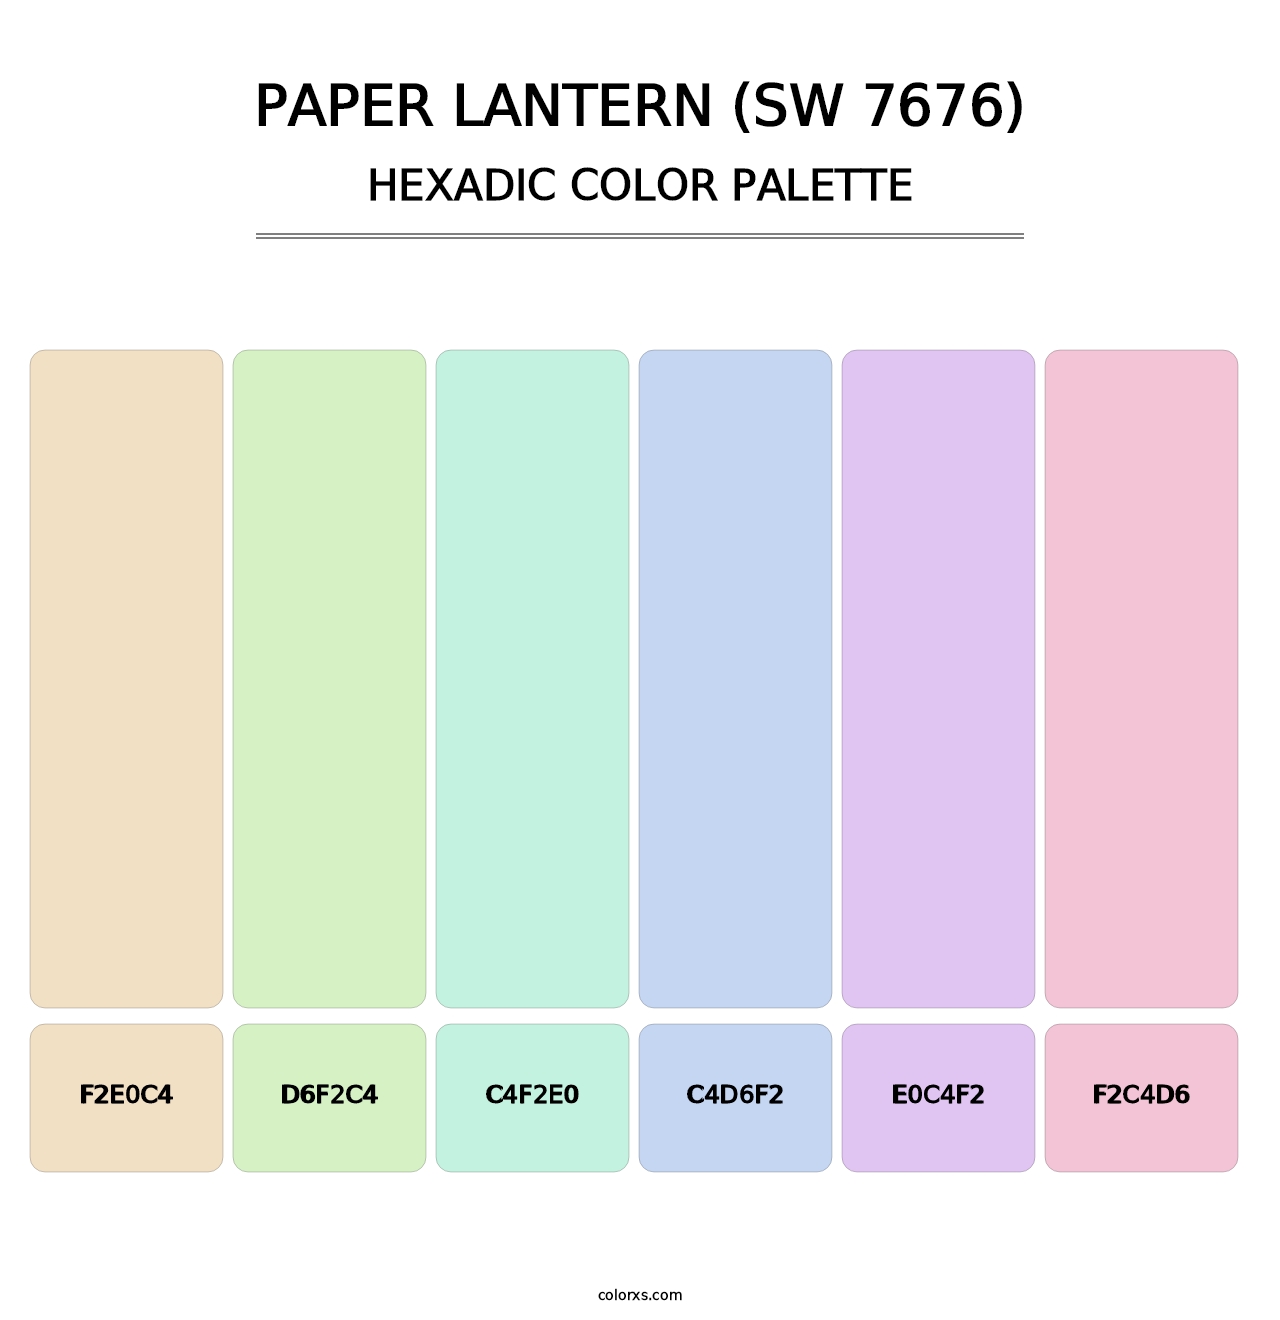 Paper Lantern (SW 7676) - Hexadic Color Palette